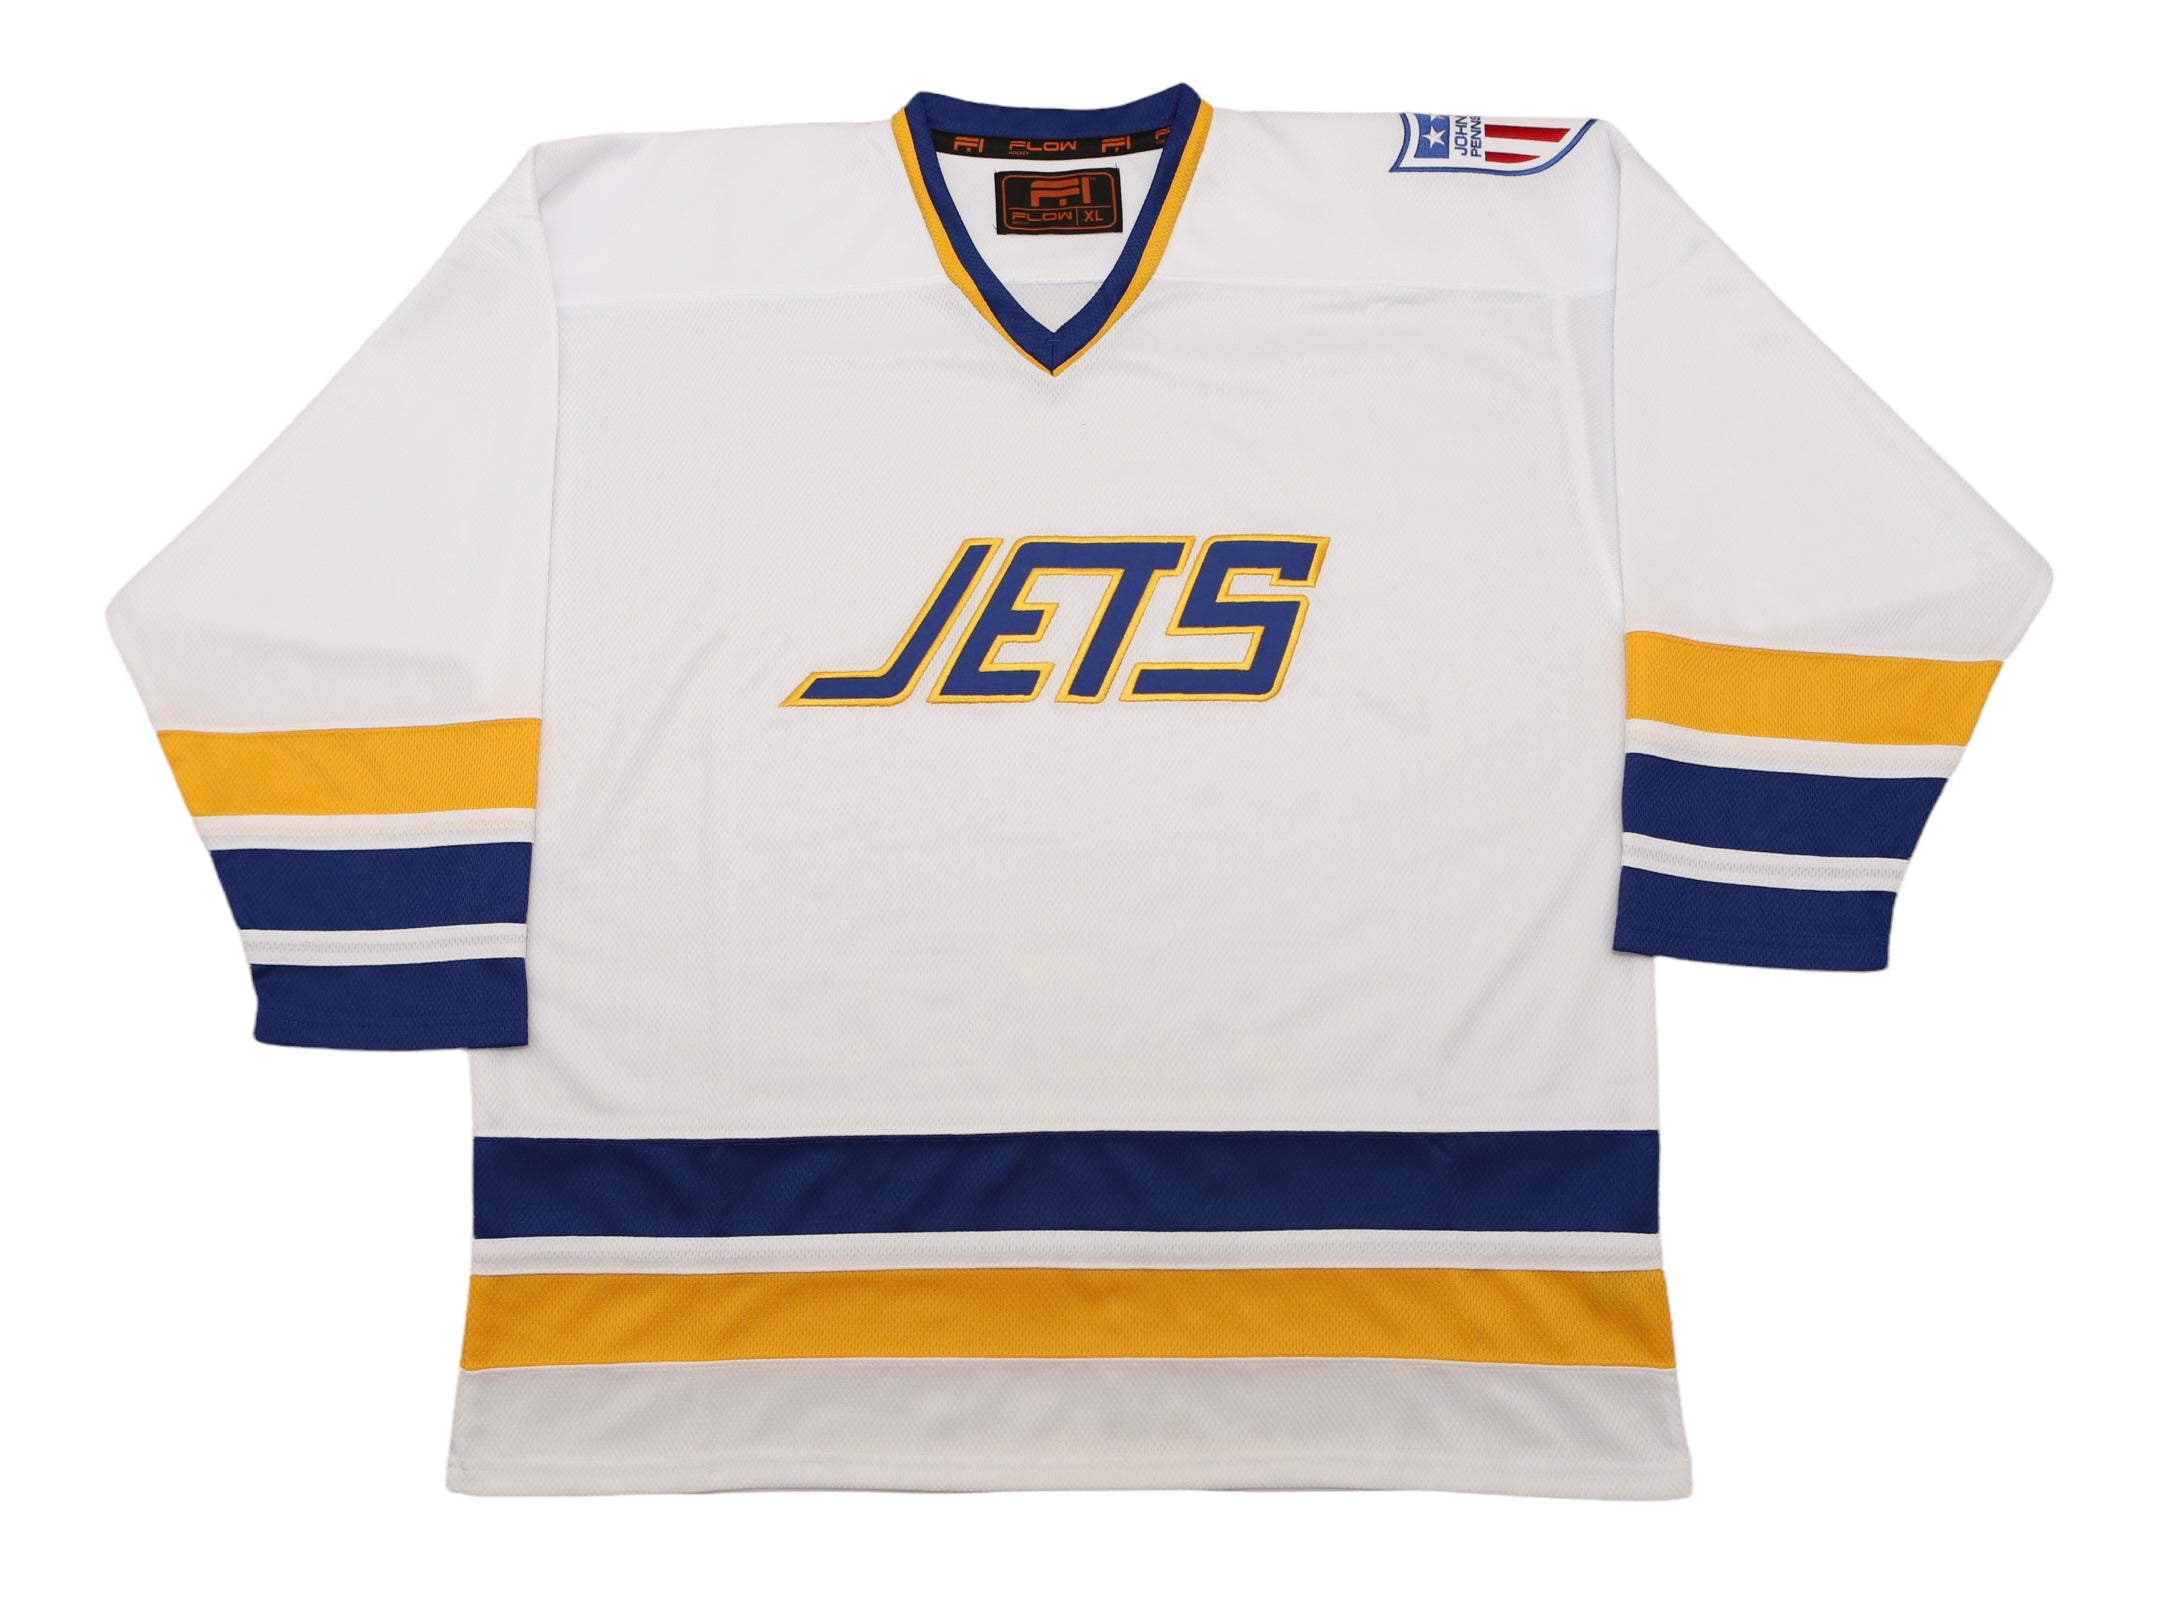 Our Top 6 Vintage NHL Jerseys - Slapshot Signatures